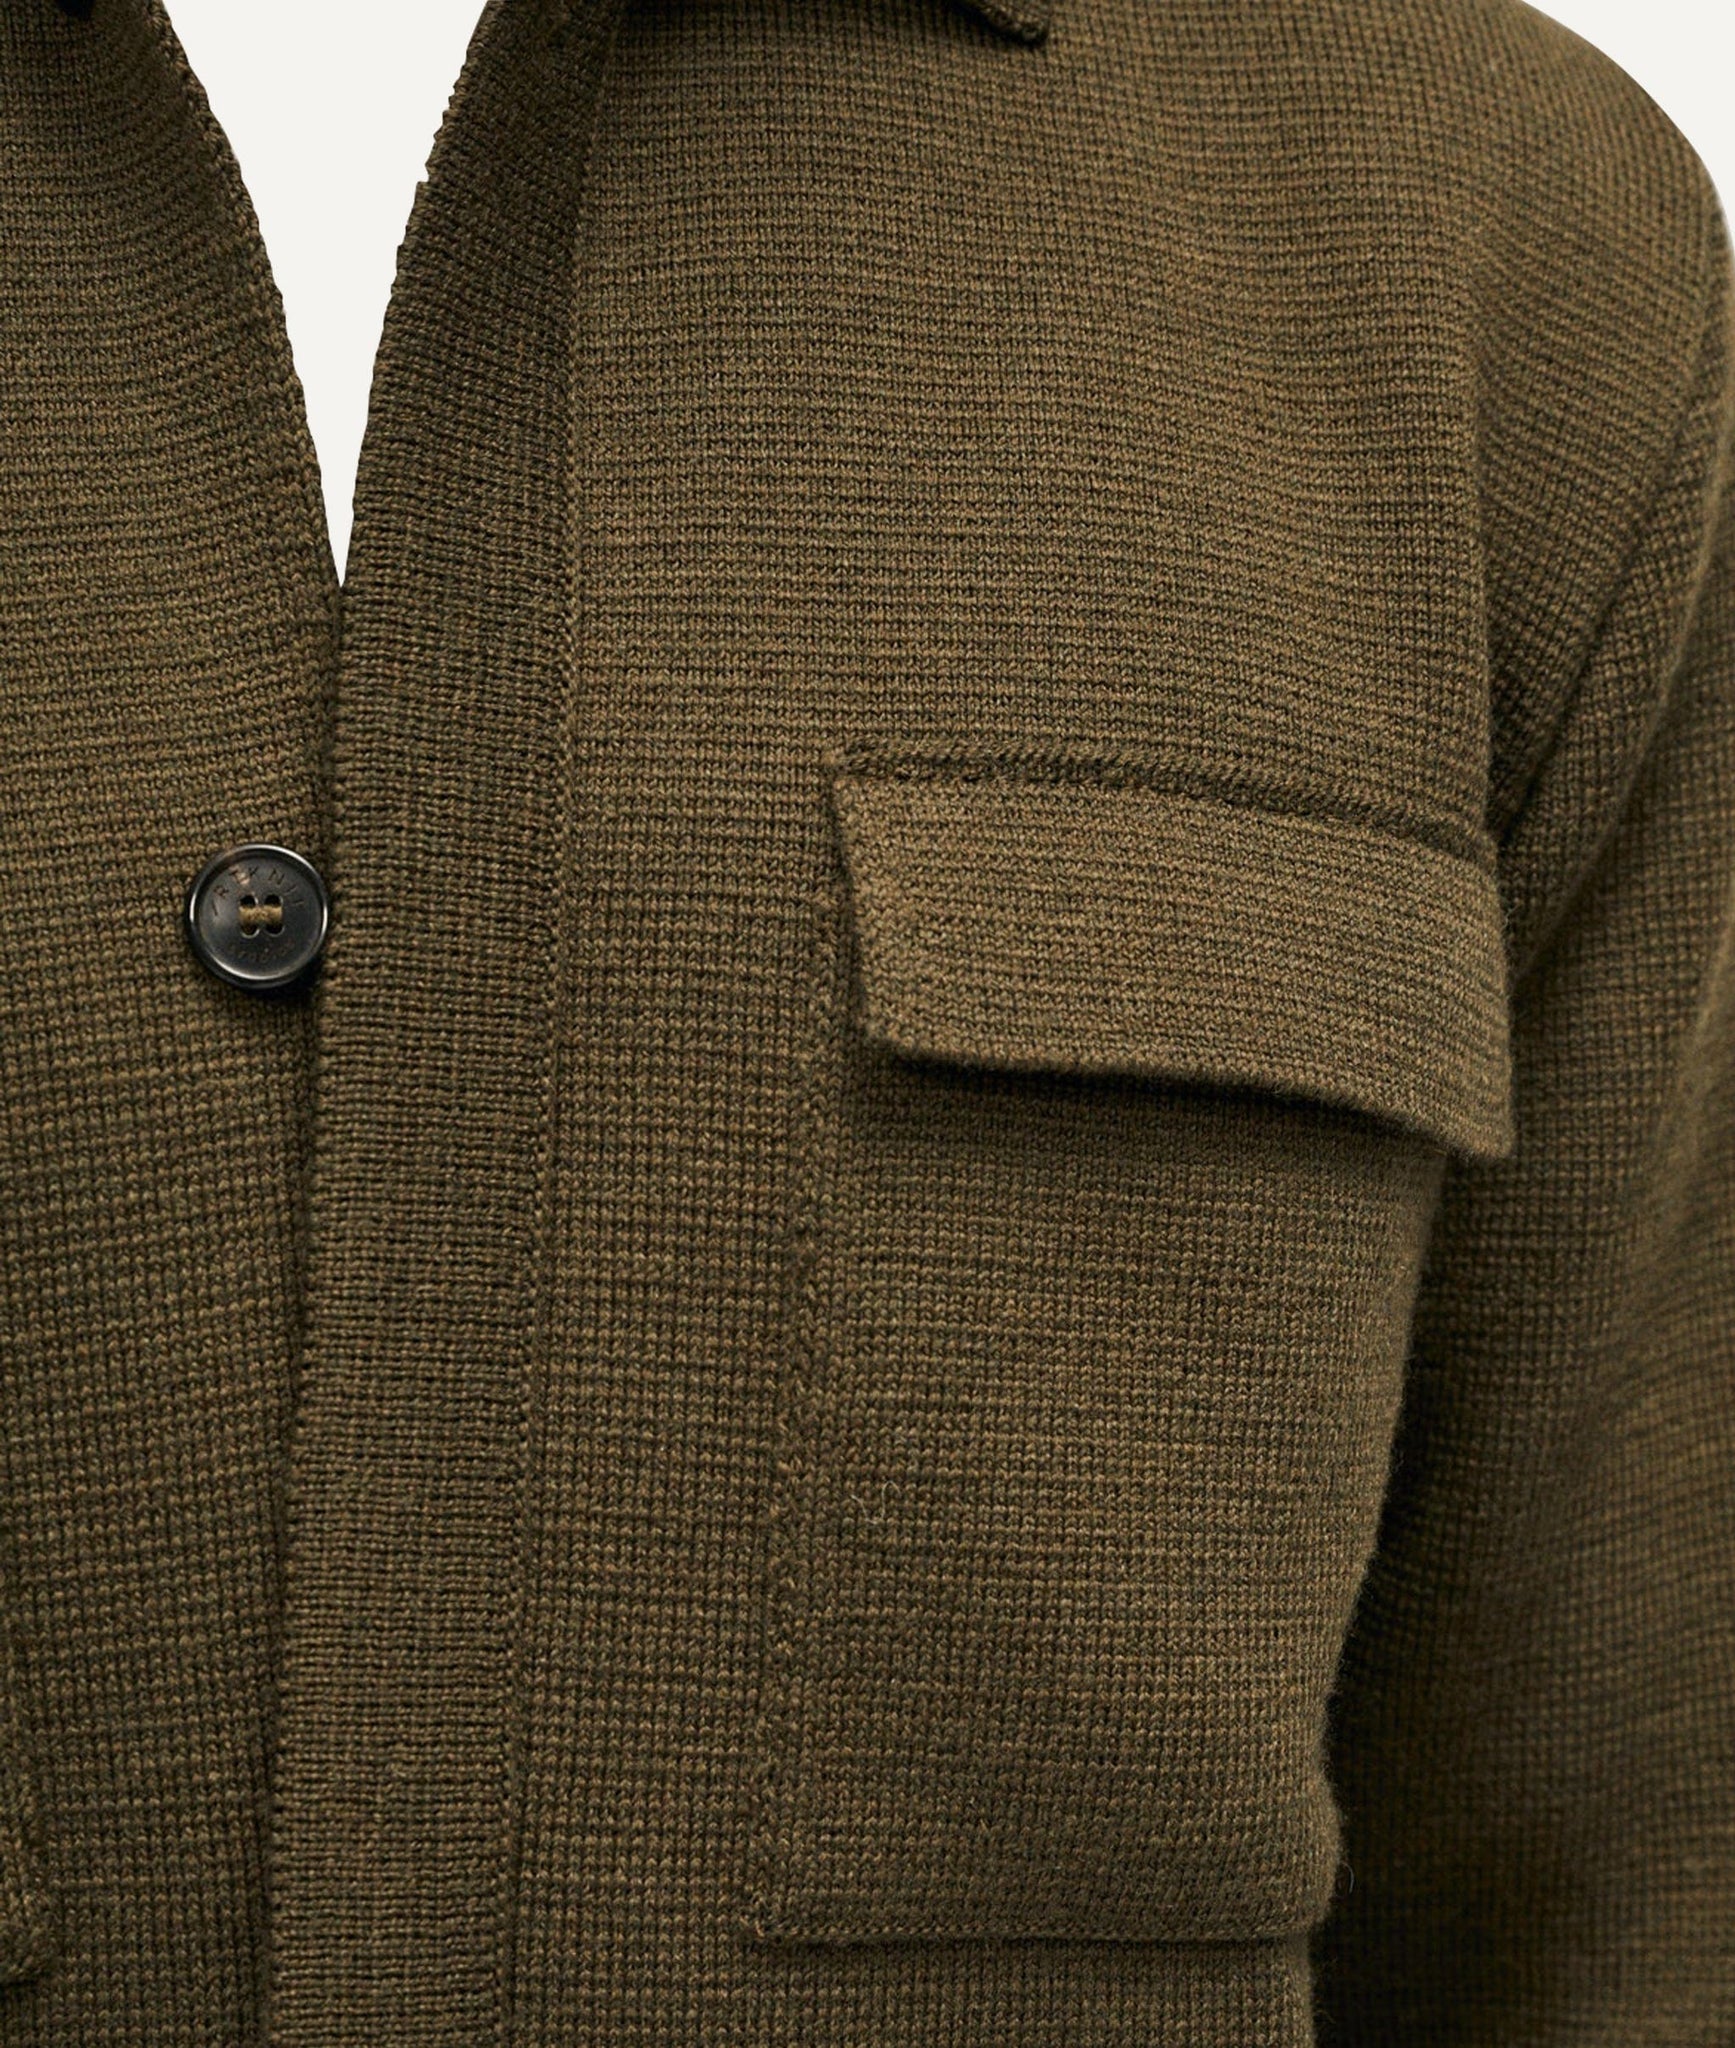 The Merino Wool Knit Jacket